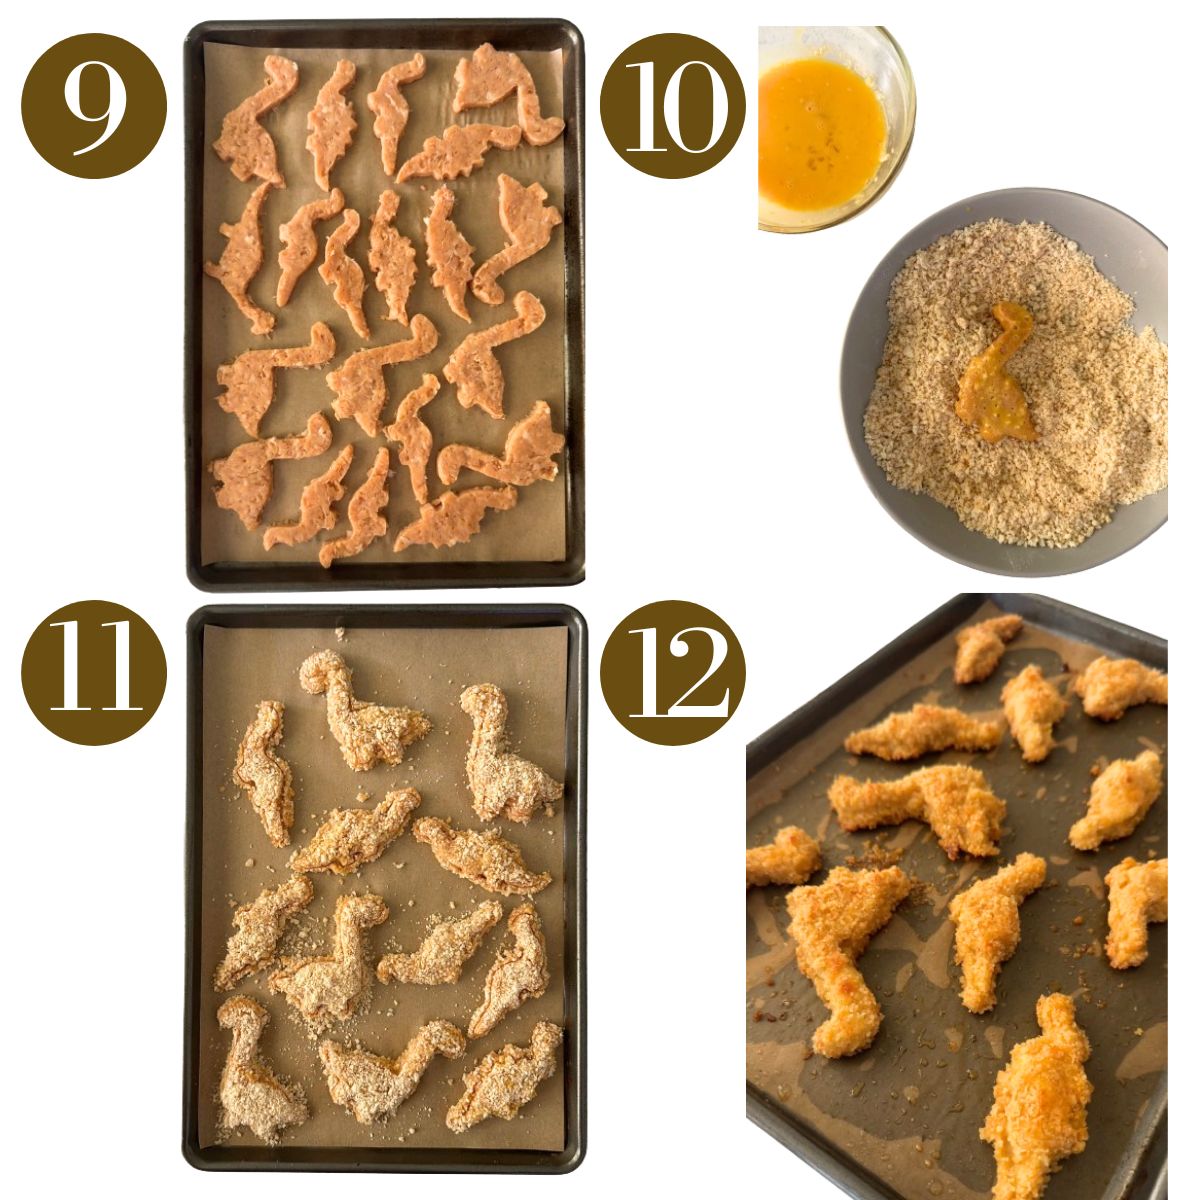 Steps to make homemade dino nuggets.